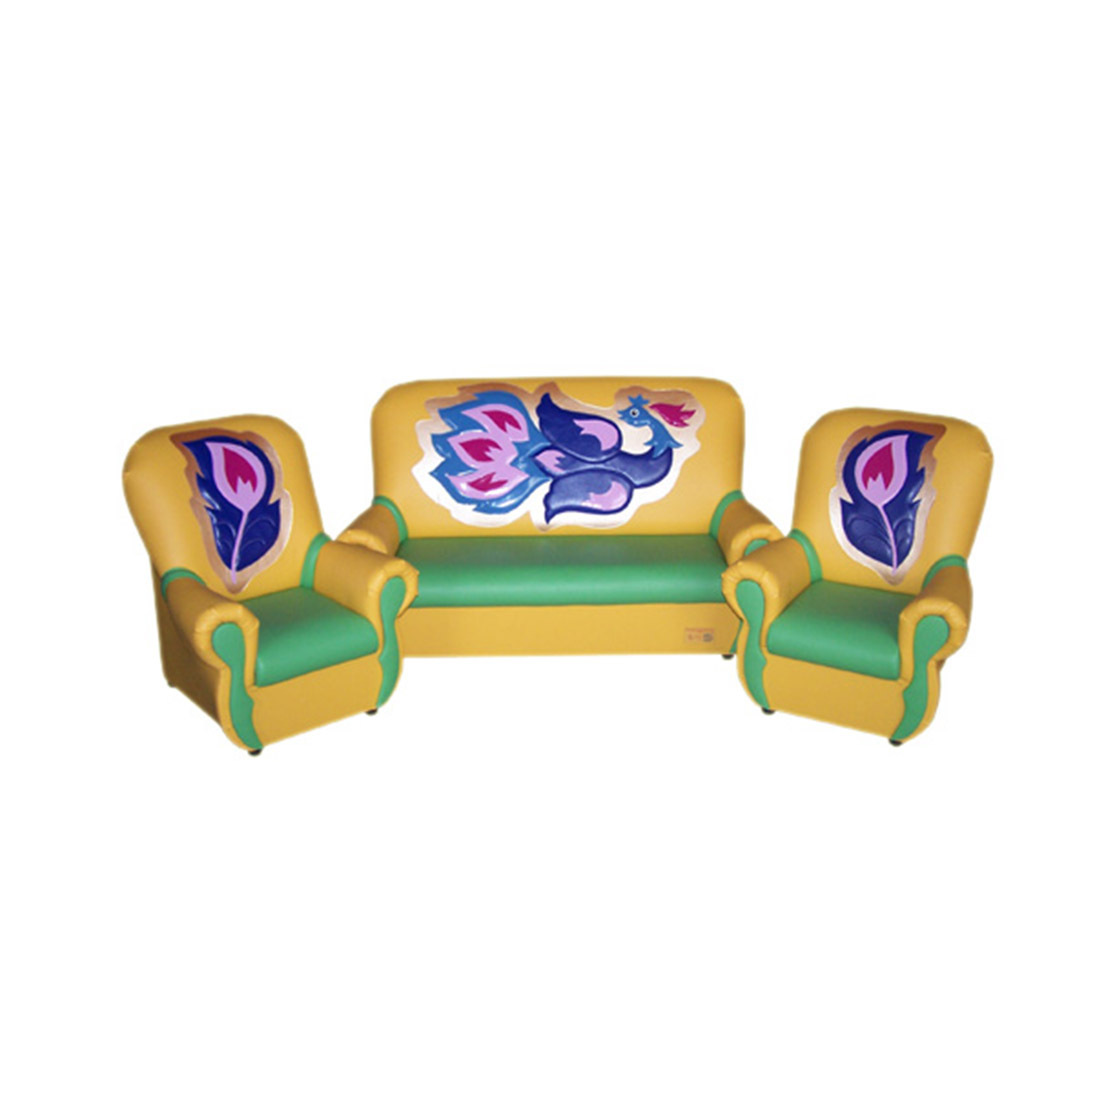 Комплект мягкой мебели «Карина Колобок» 6904208